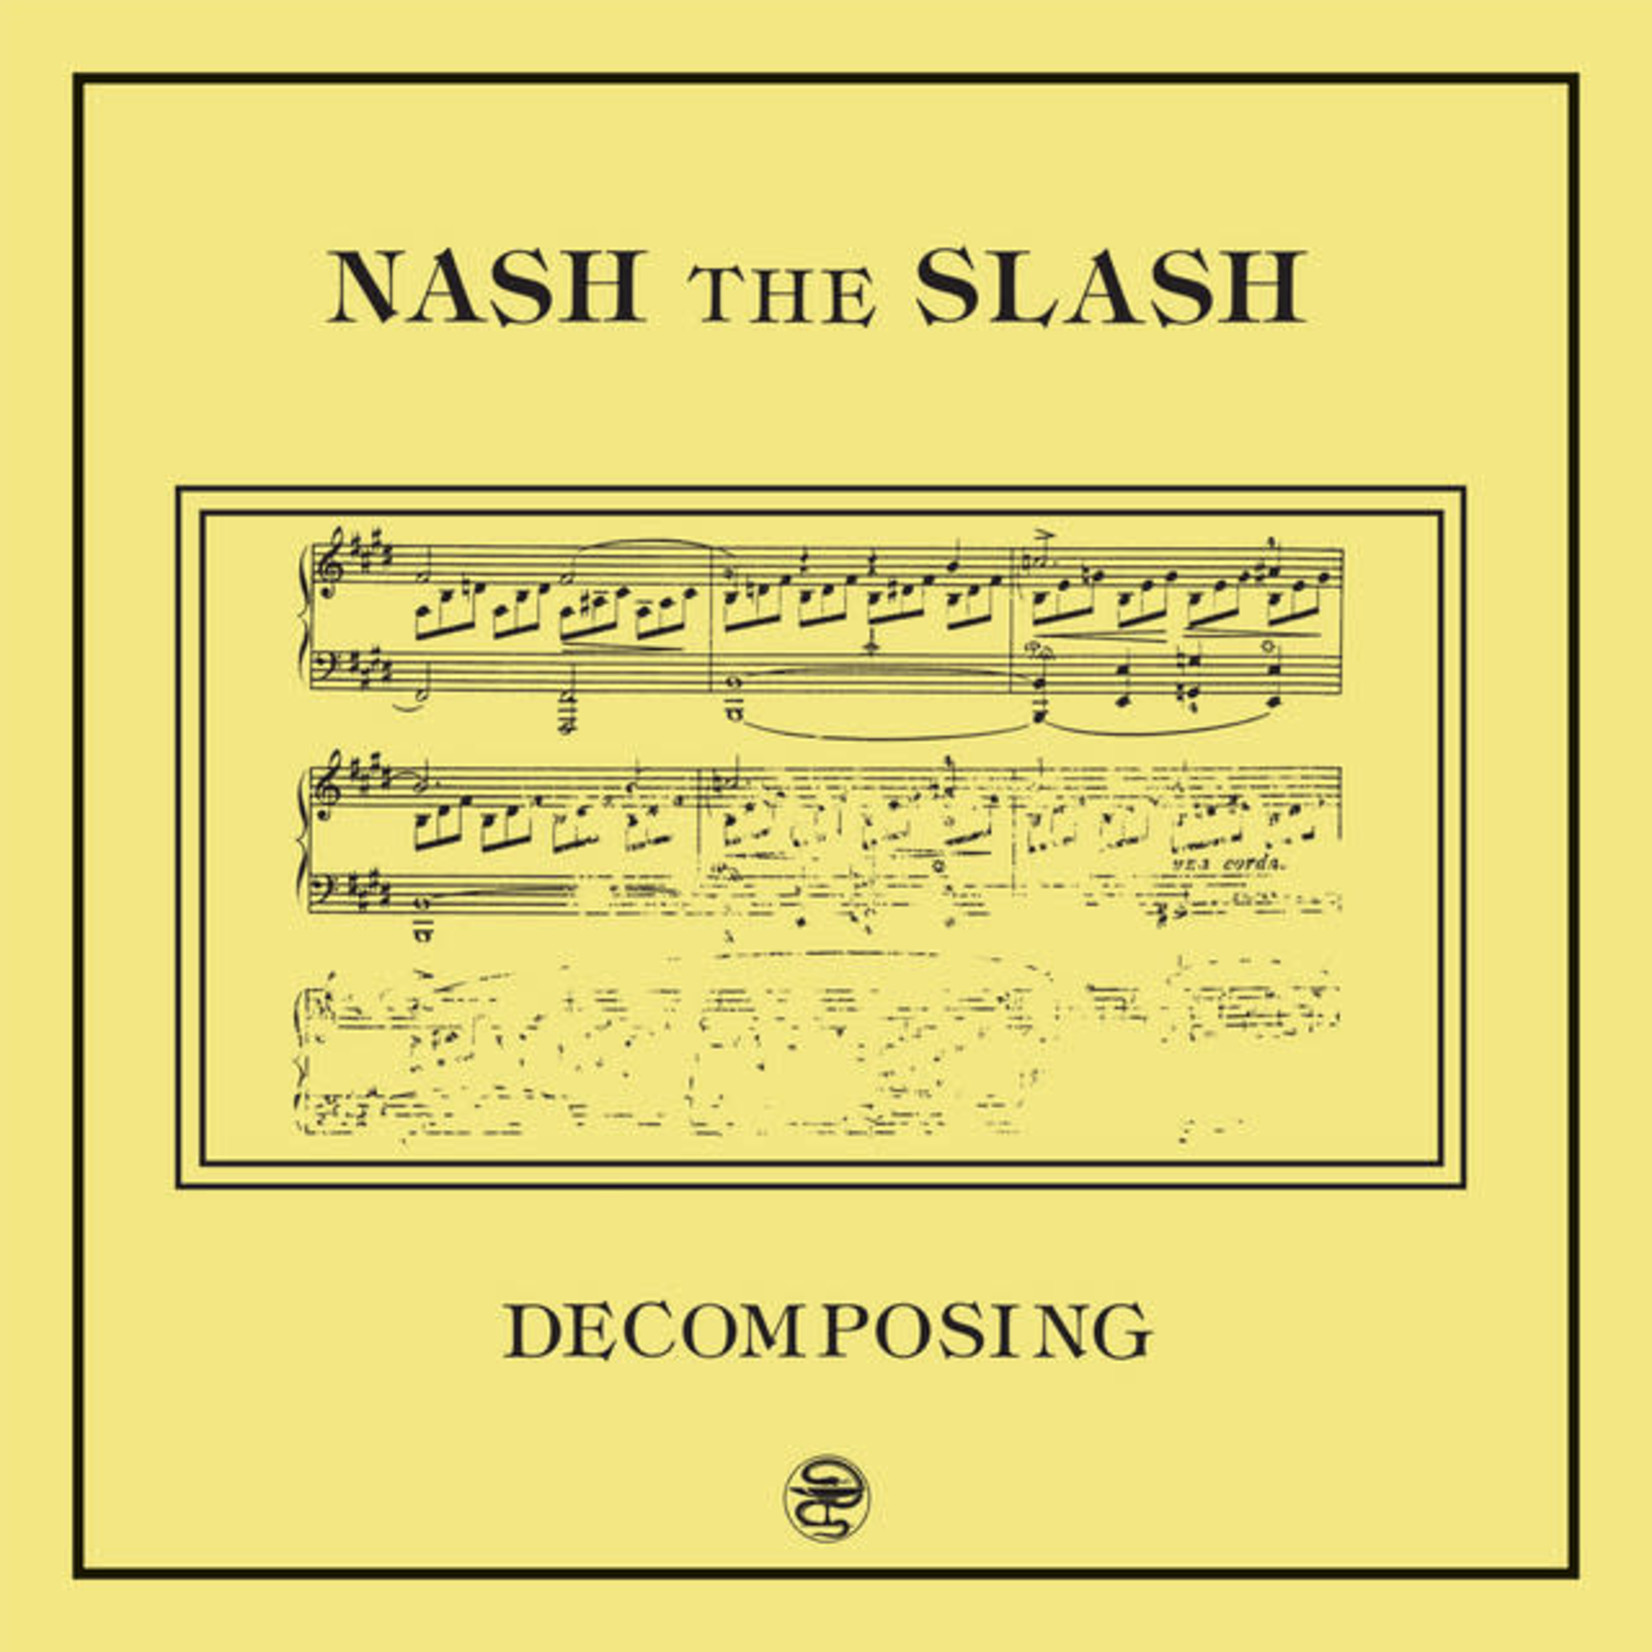 Nash the Slash - Decomposing